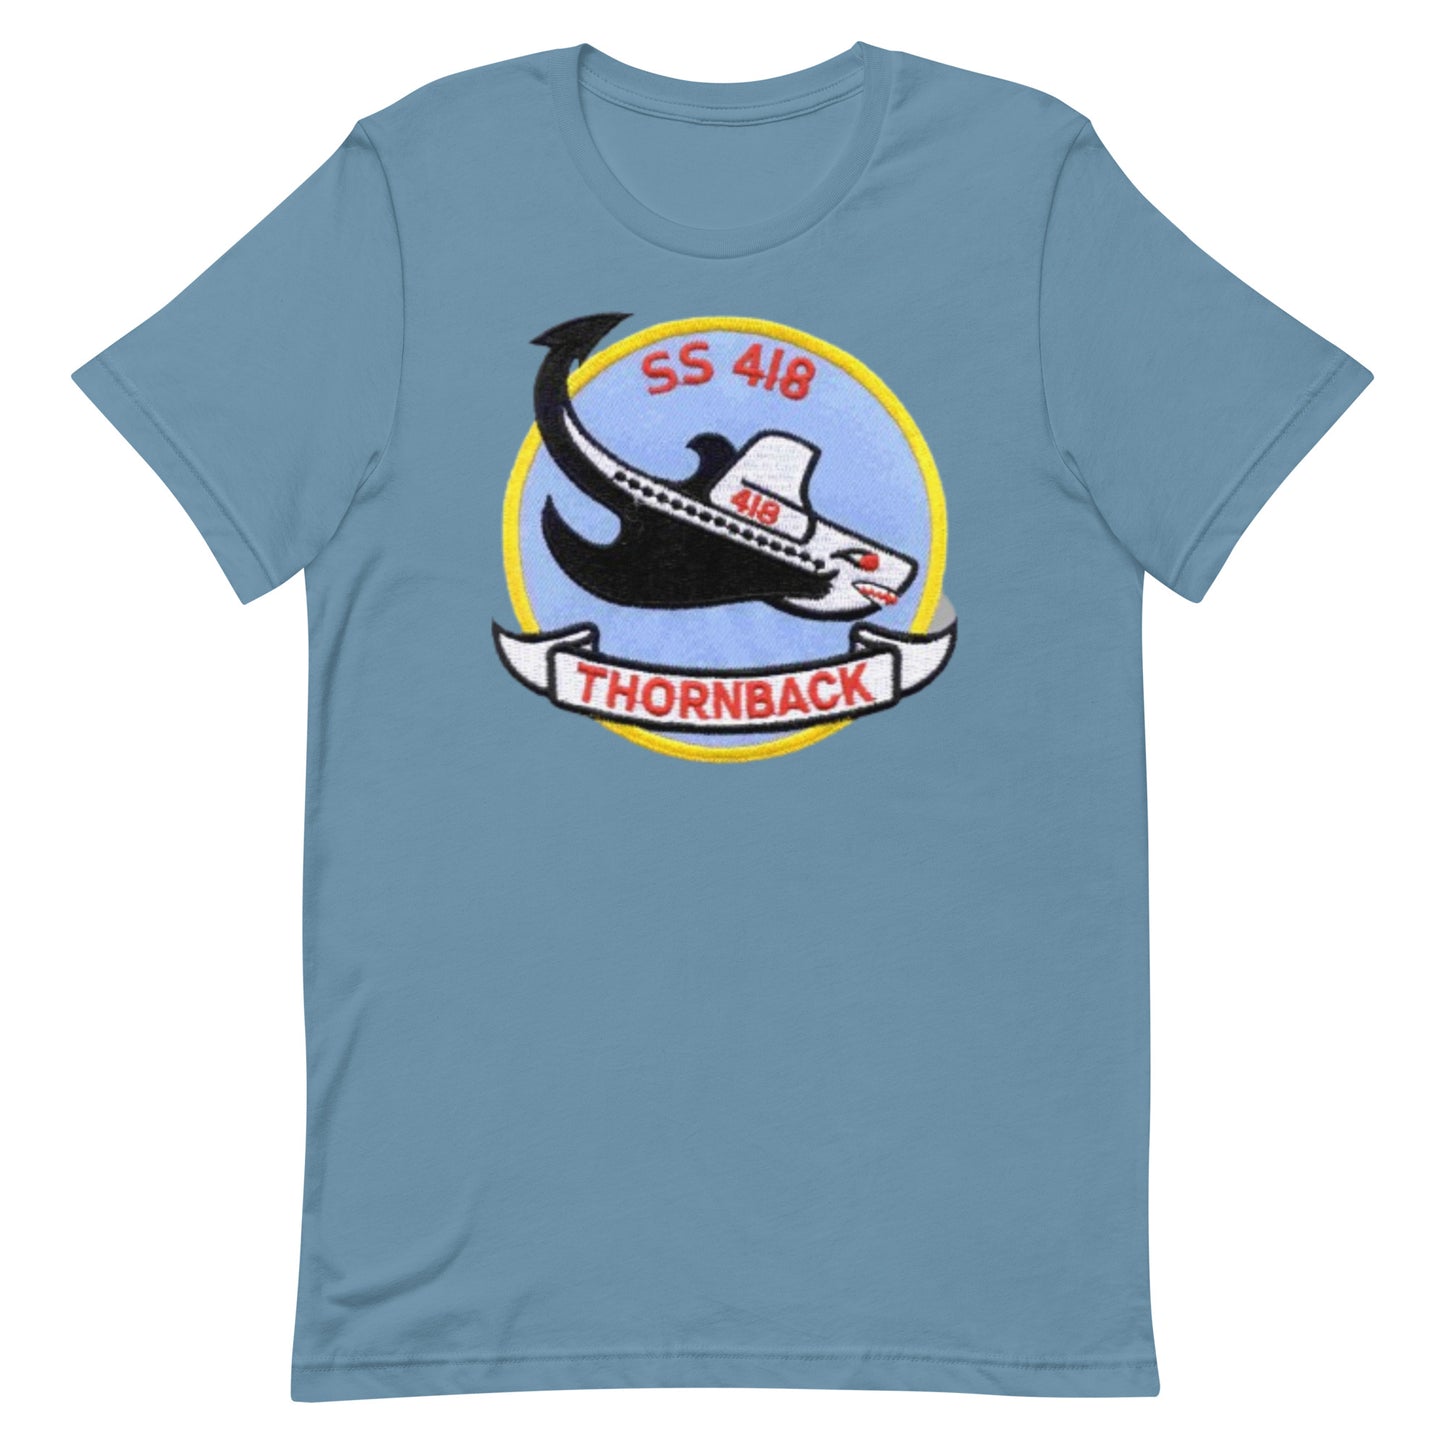 S.S. 418 Thornback NAVY Tribute Series T-Shirt